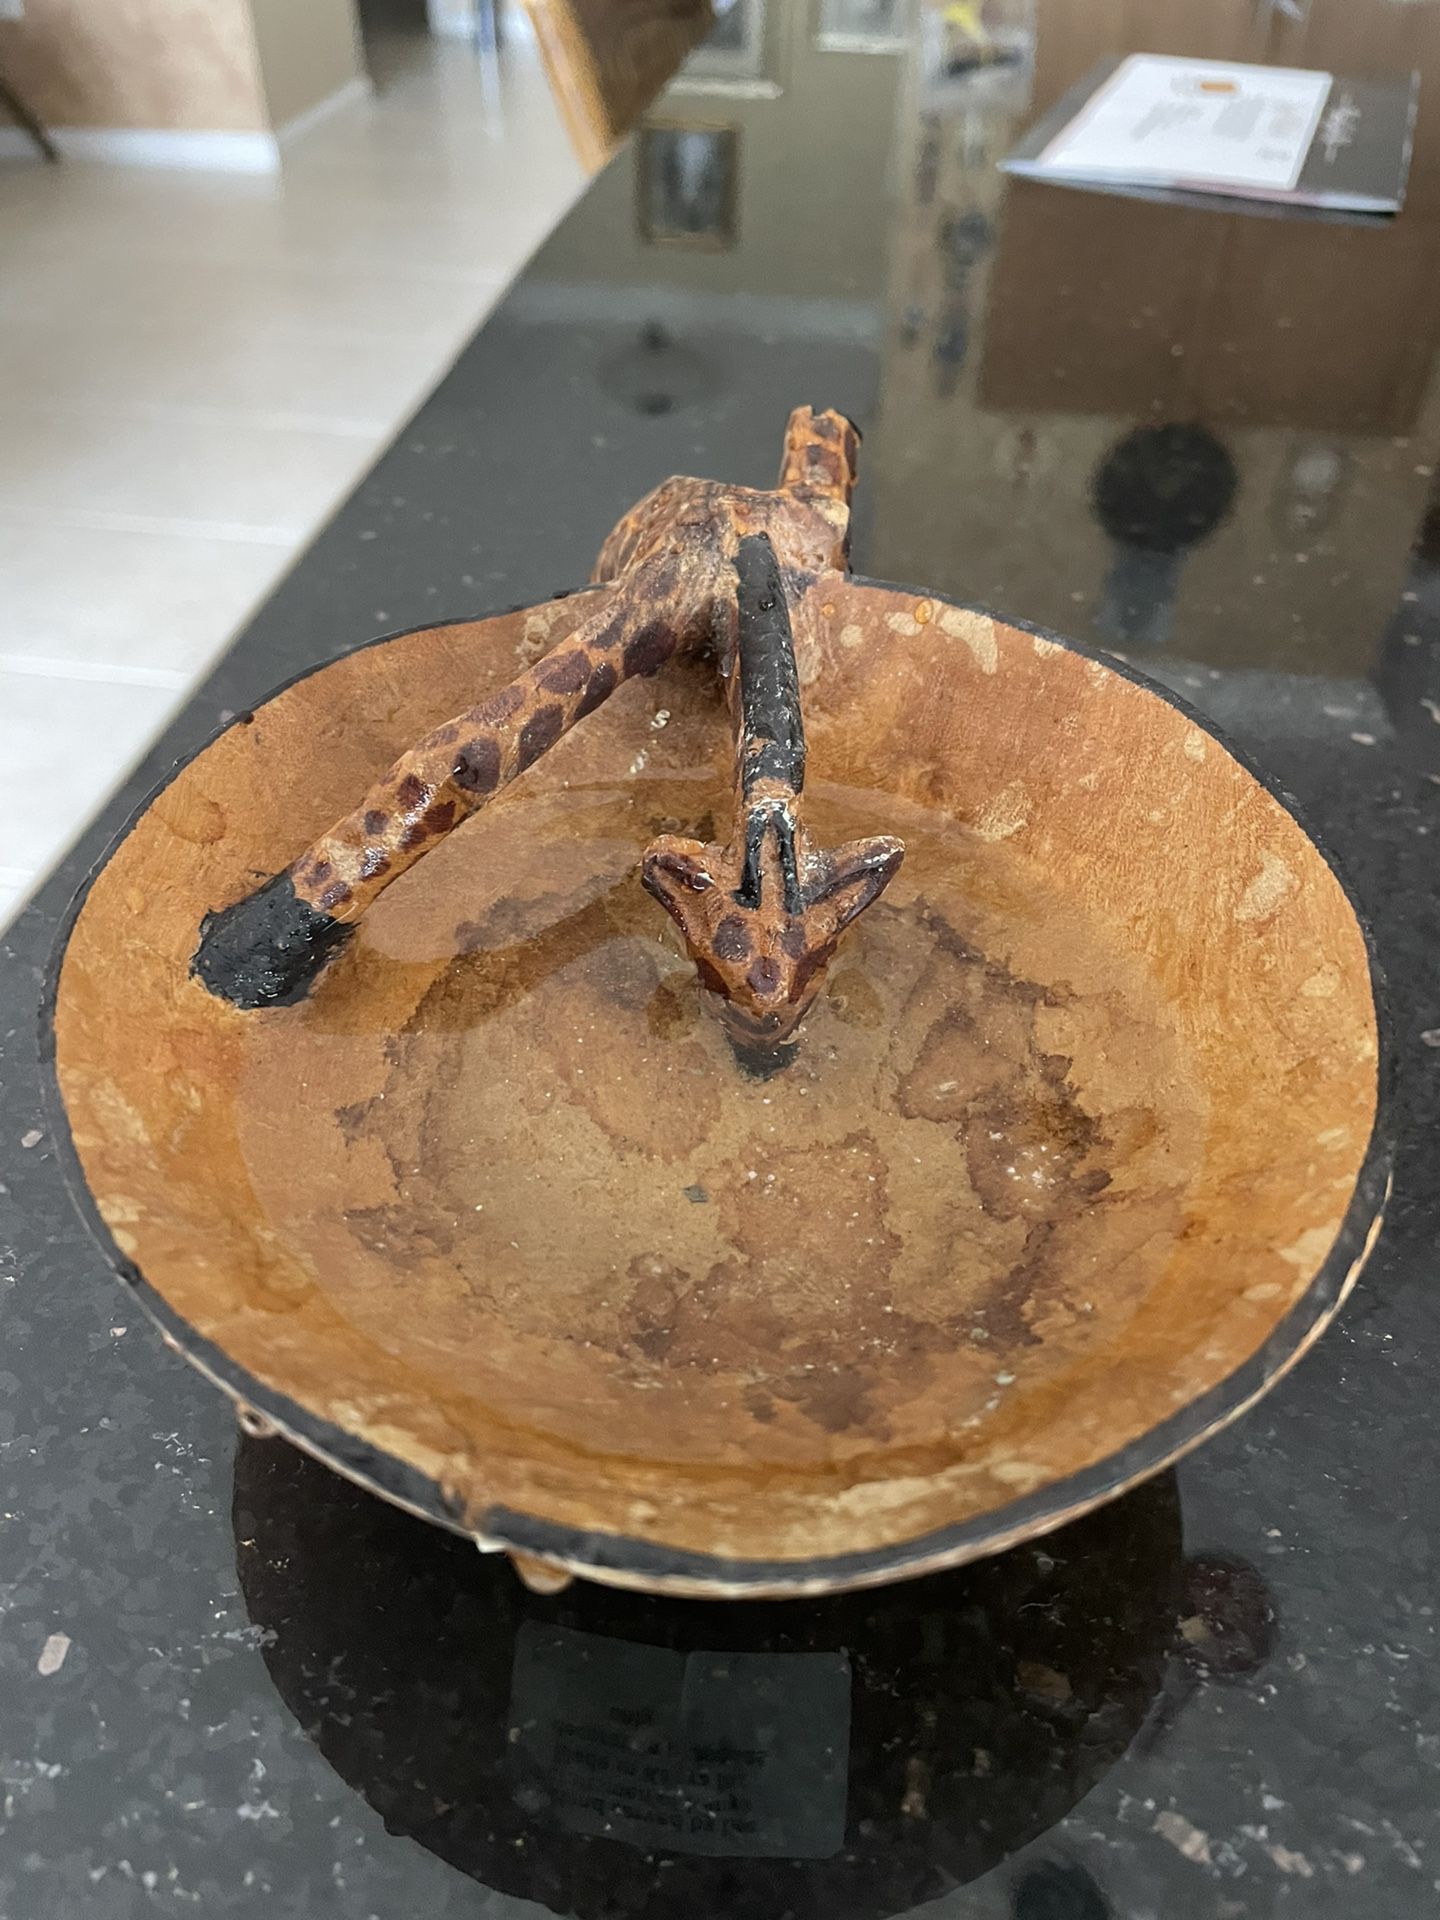 African Decor Giraffe Drinking From Wooden Bowl Made in Kenya 5” Round  Handmade in Parkland 